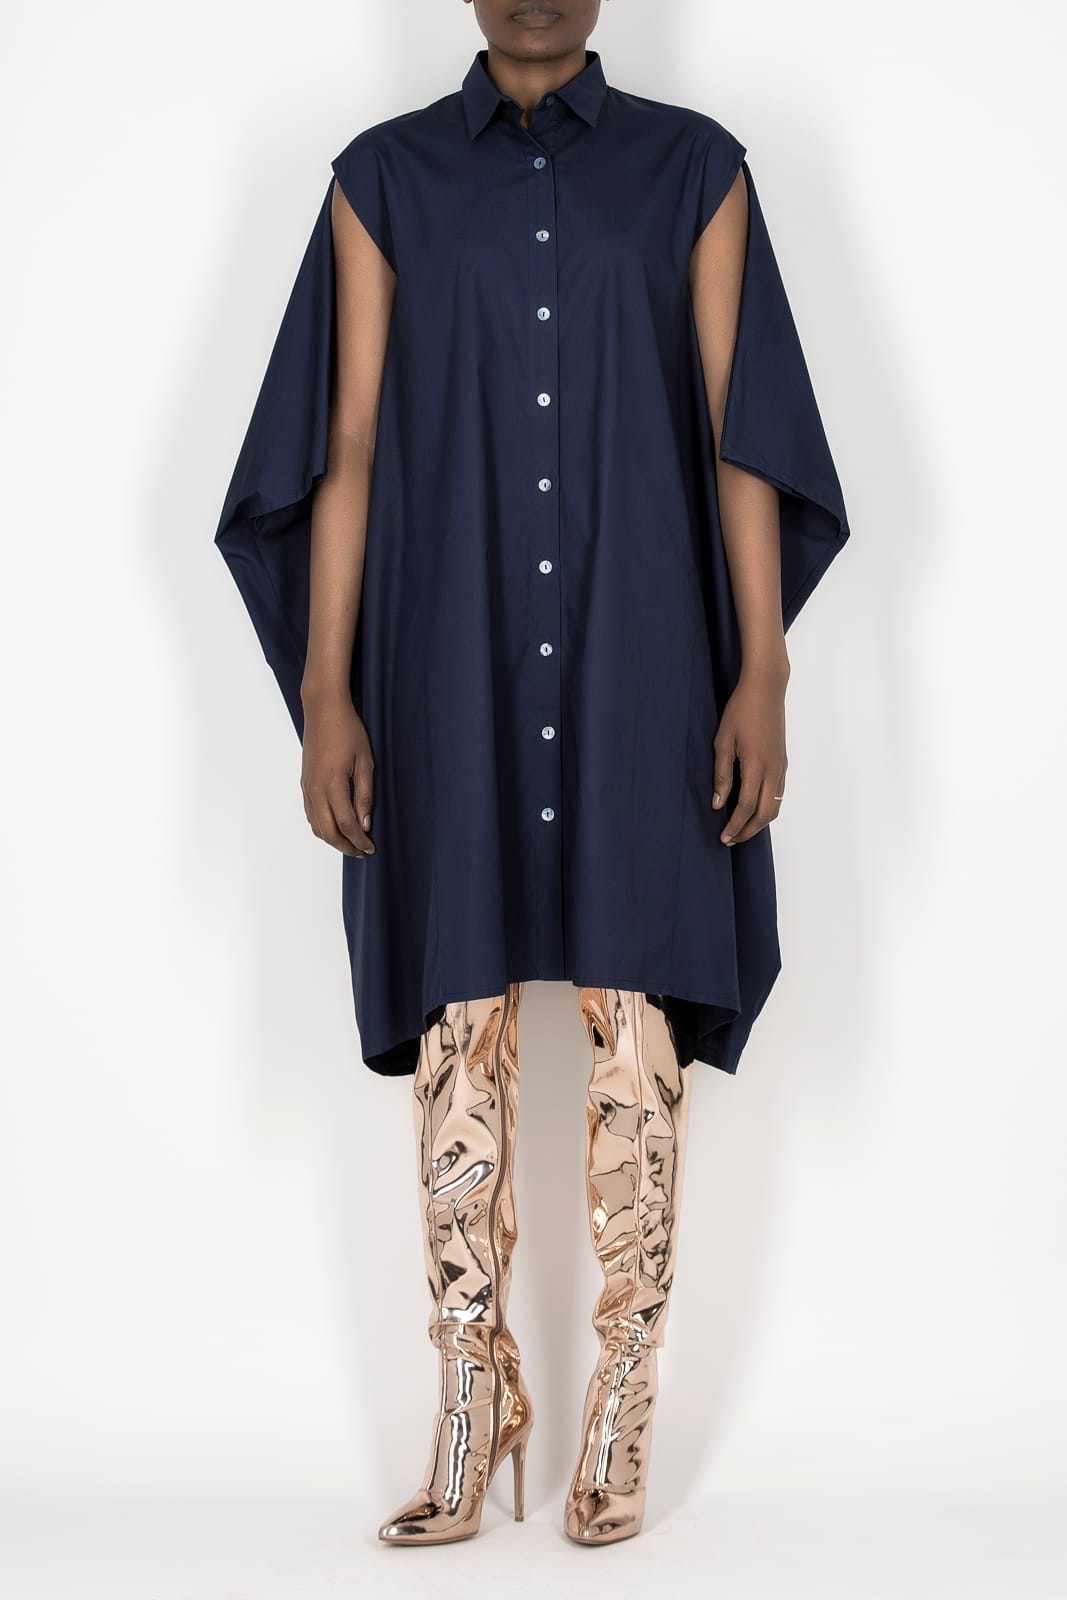 Imane Ayissi haute couture shirt dress